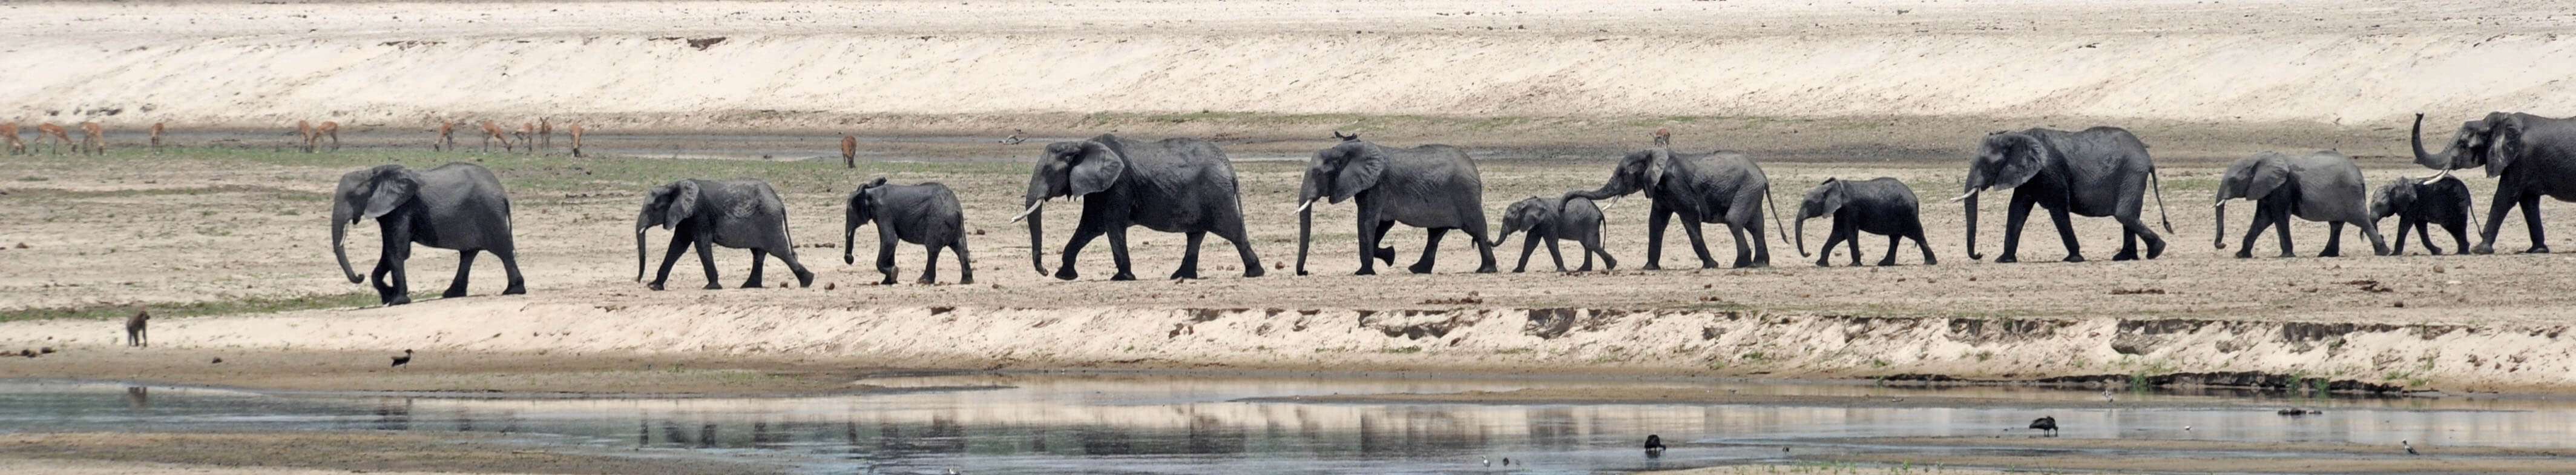 Elephants crossing the Luangwa River